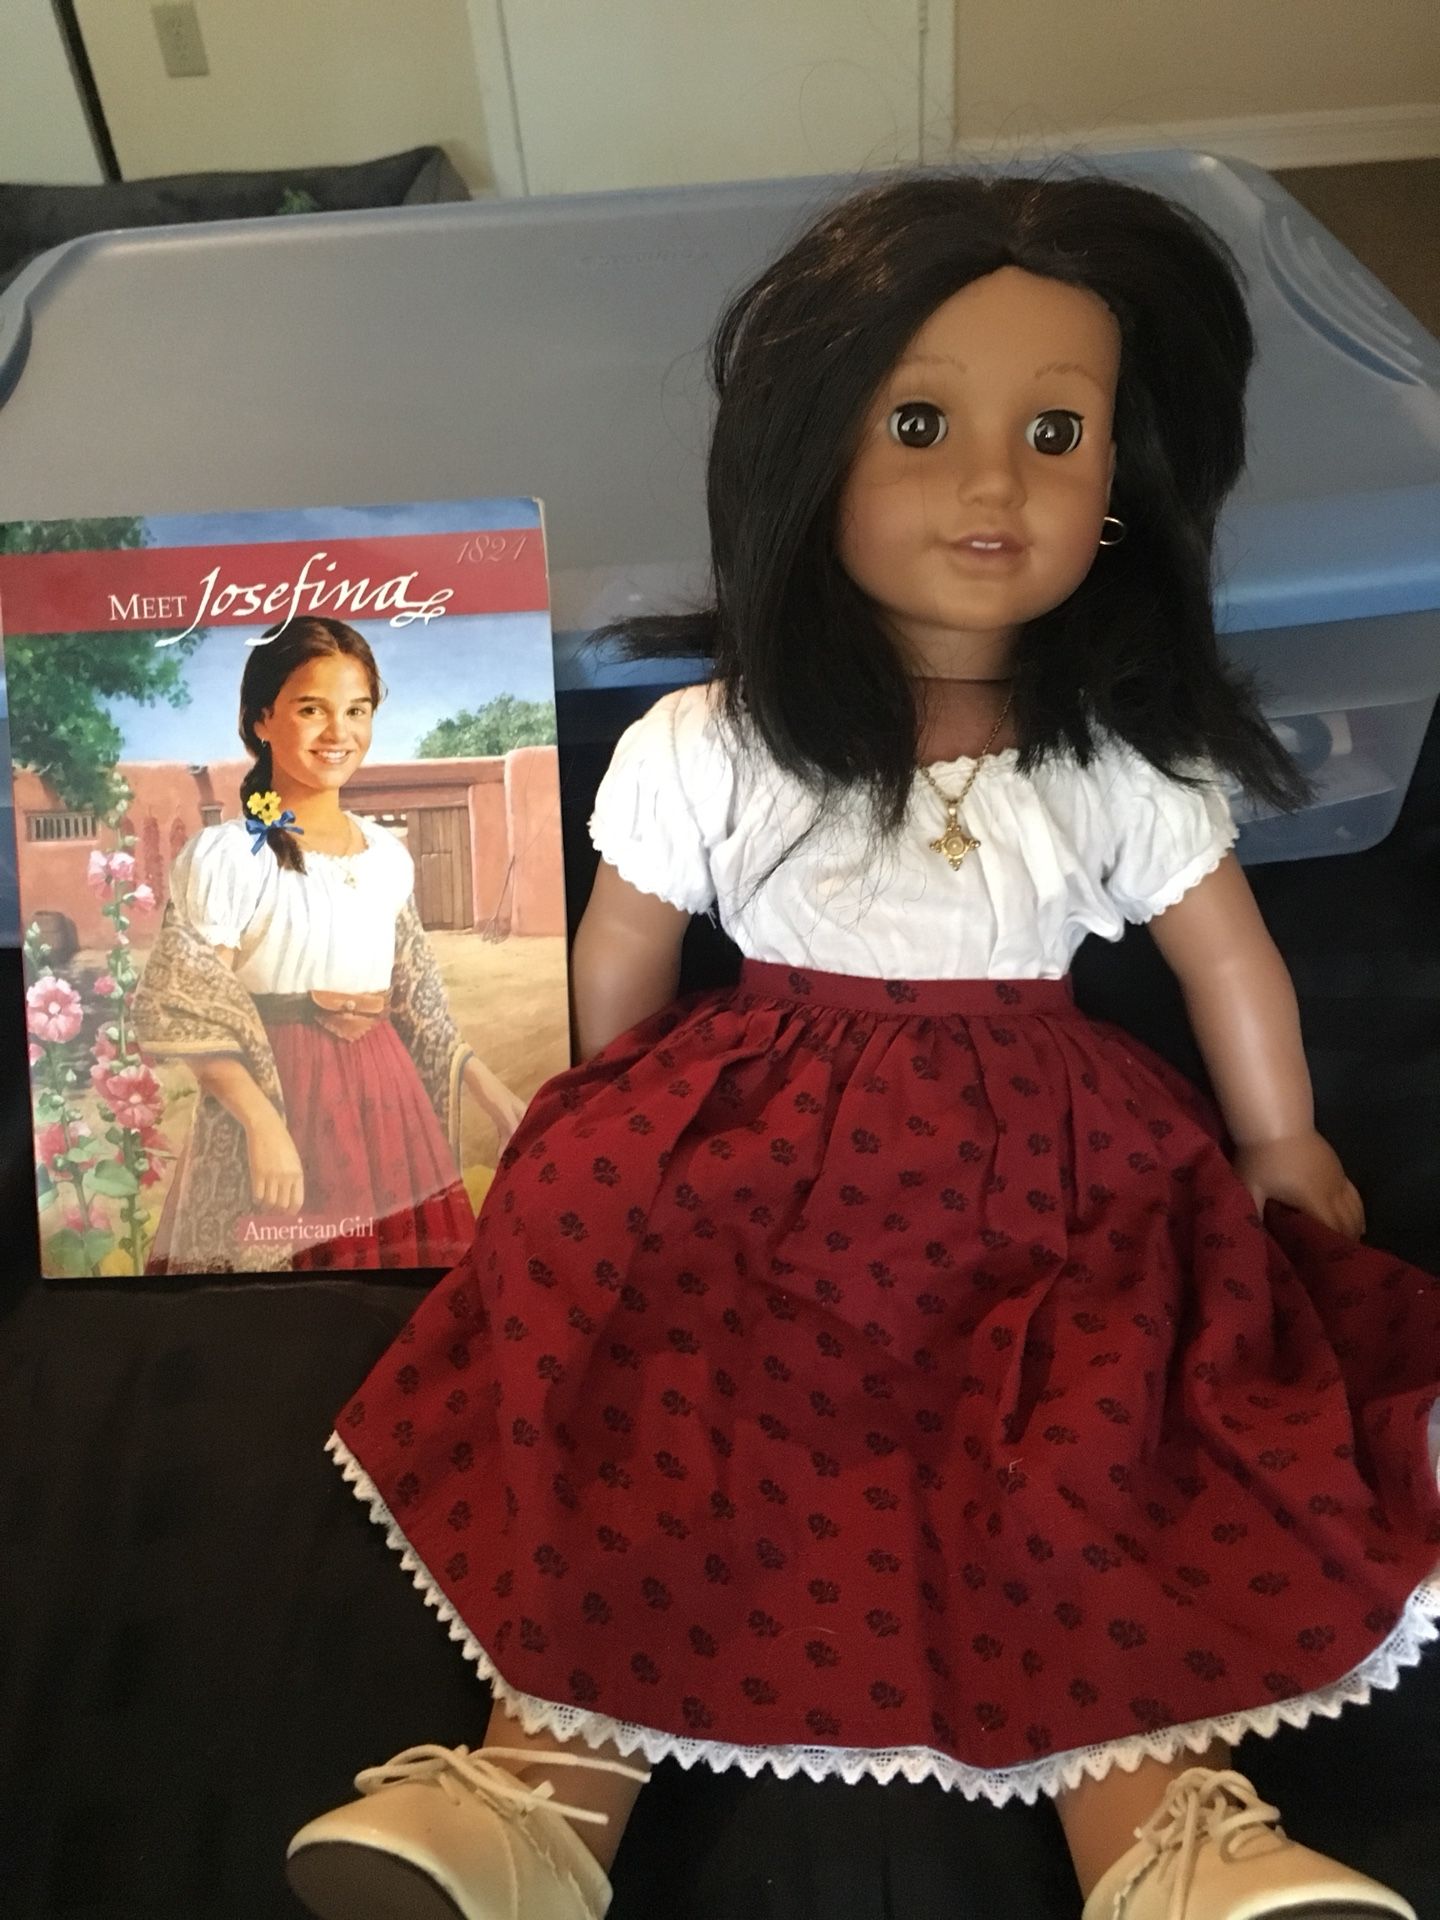 American girl dolls plus accessories